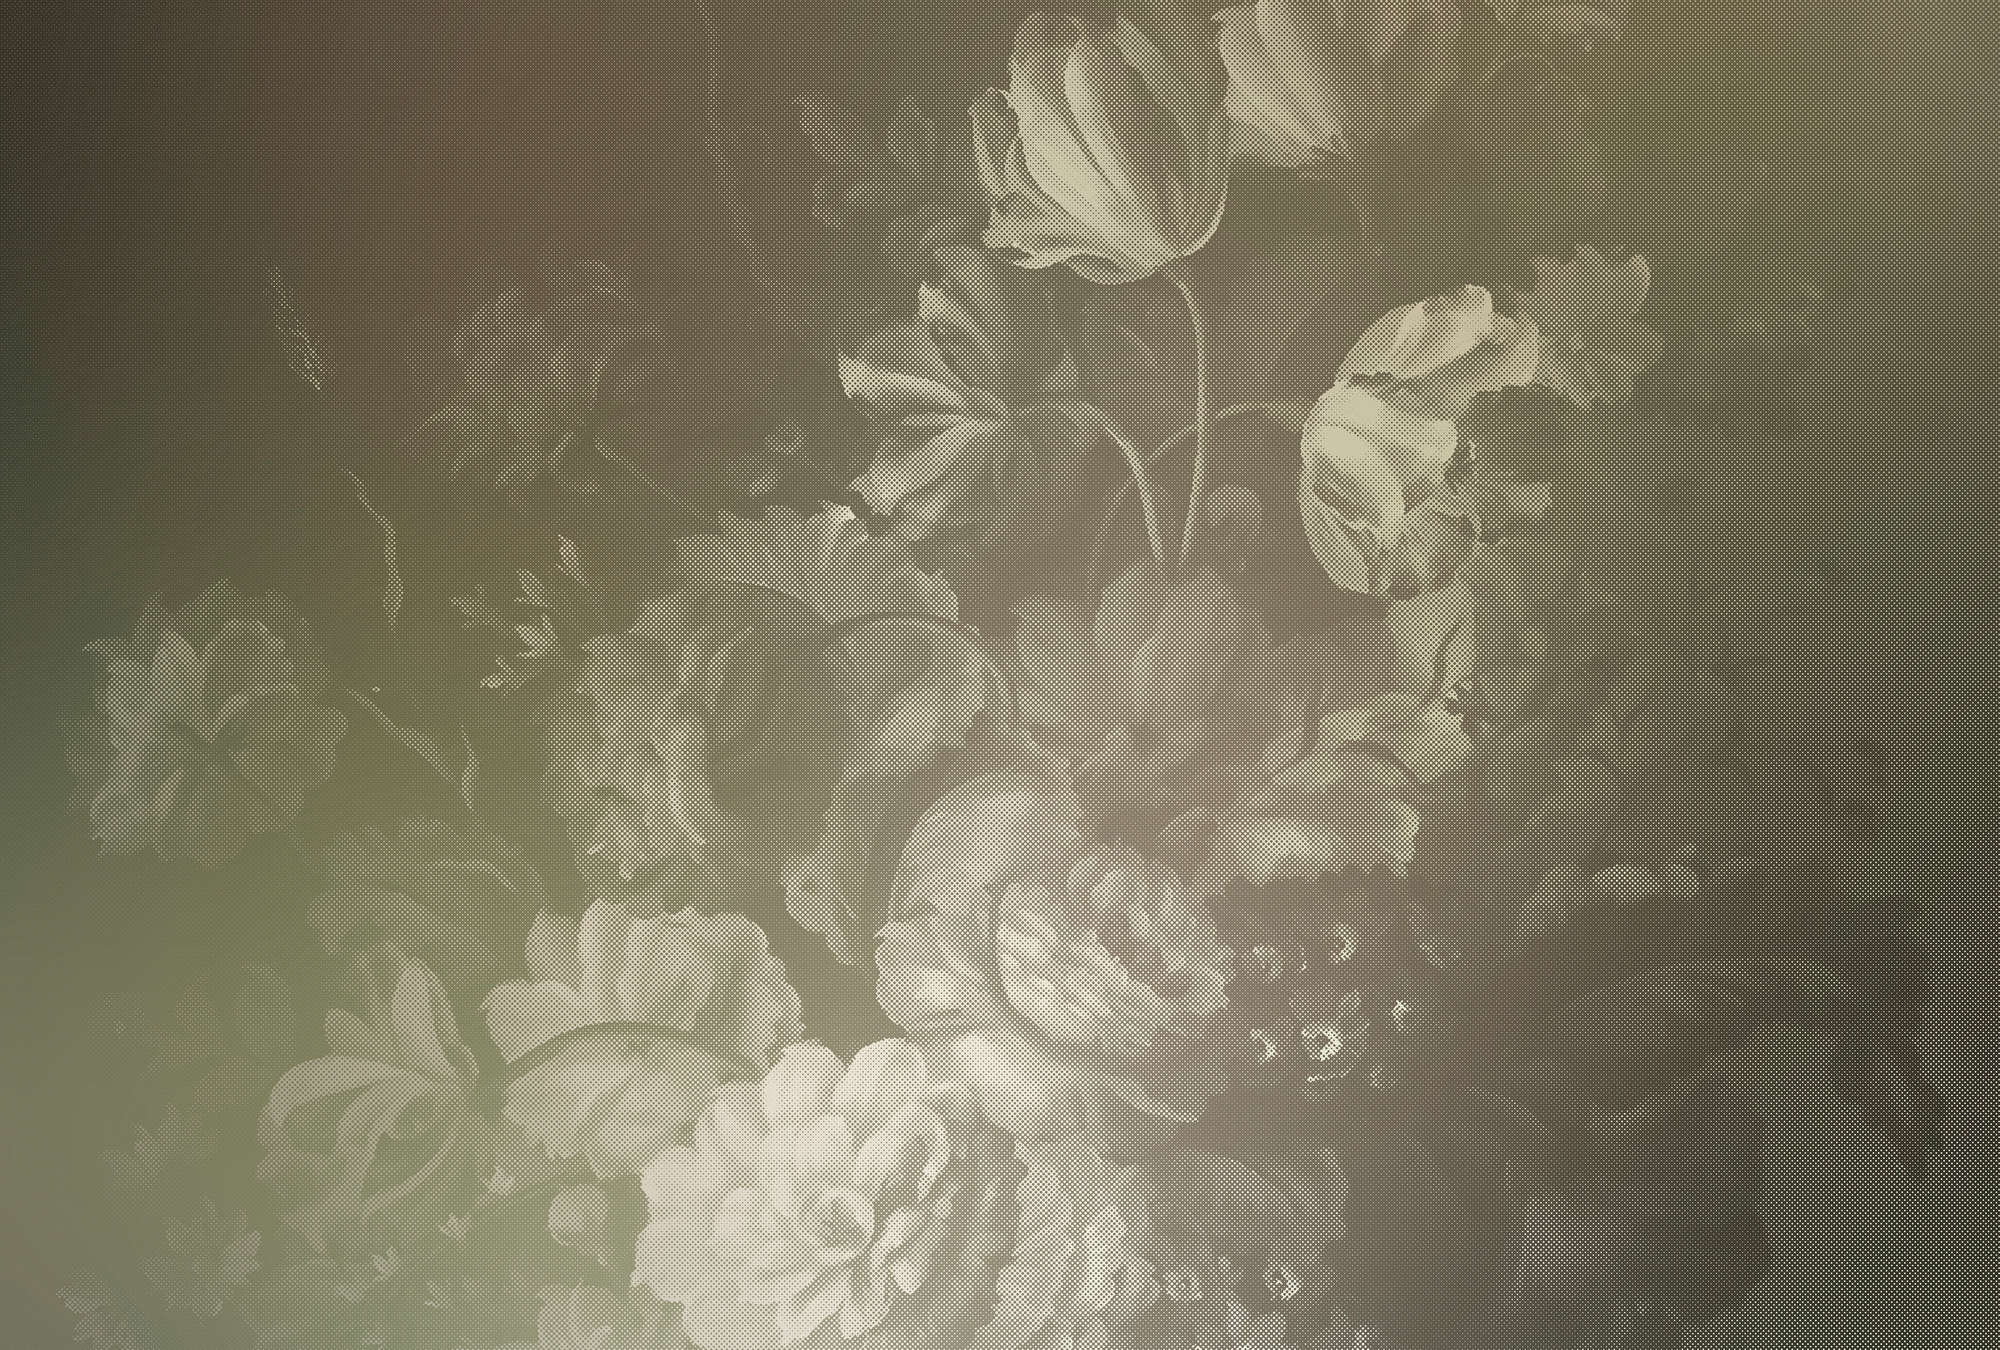             Holandés pastel 4 - Papel pintado Ramillete de flores artísticas de estilo holandés - Topo | Tejido liso mate
        